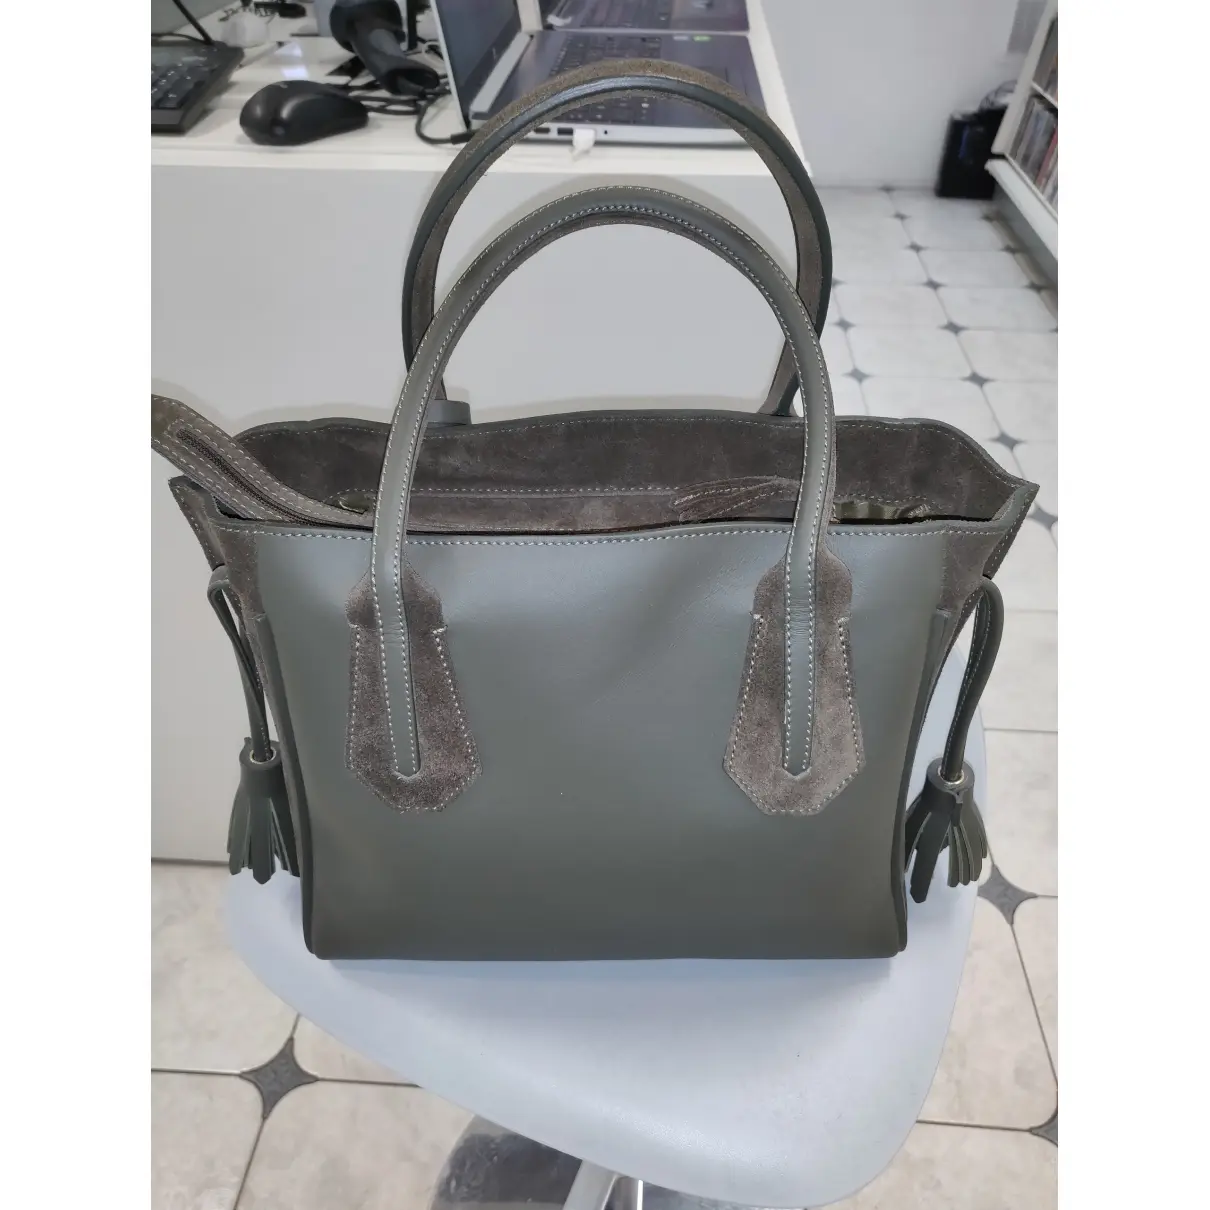 Buy Longchamp Penelope leather handbag online